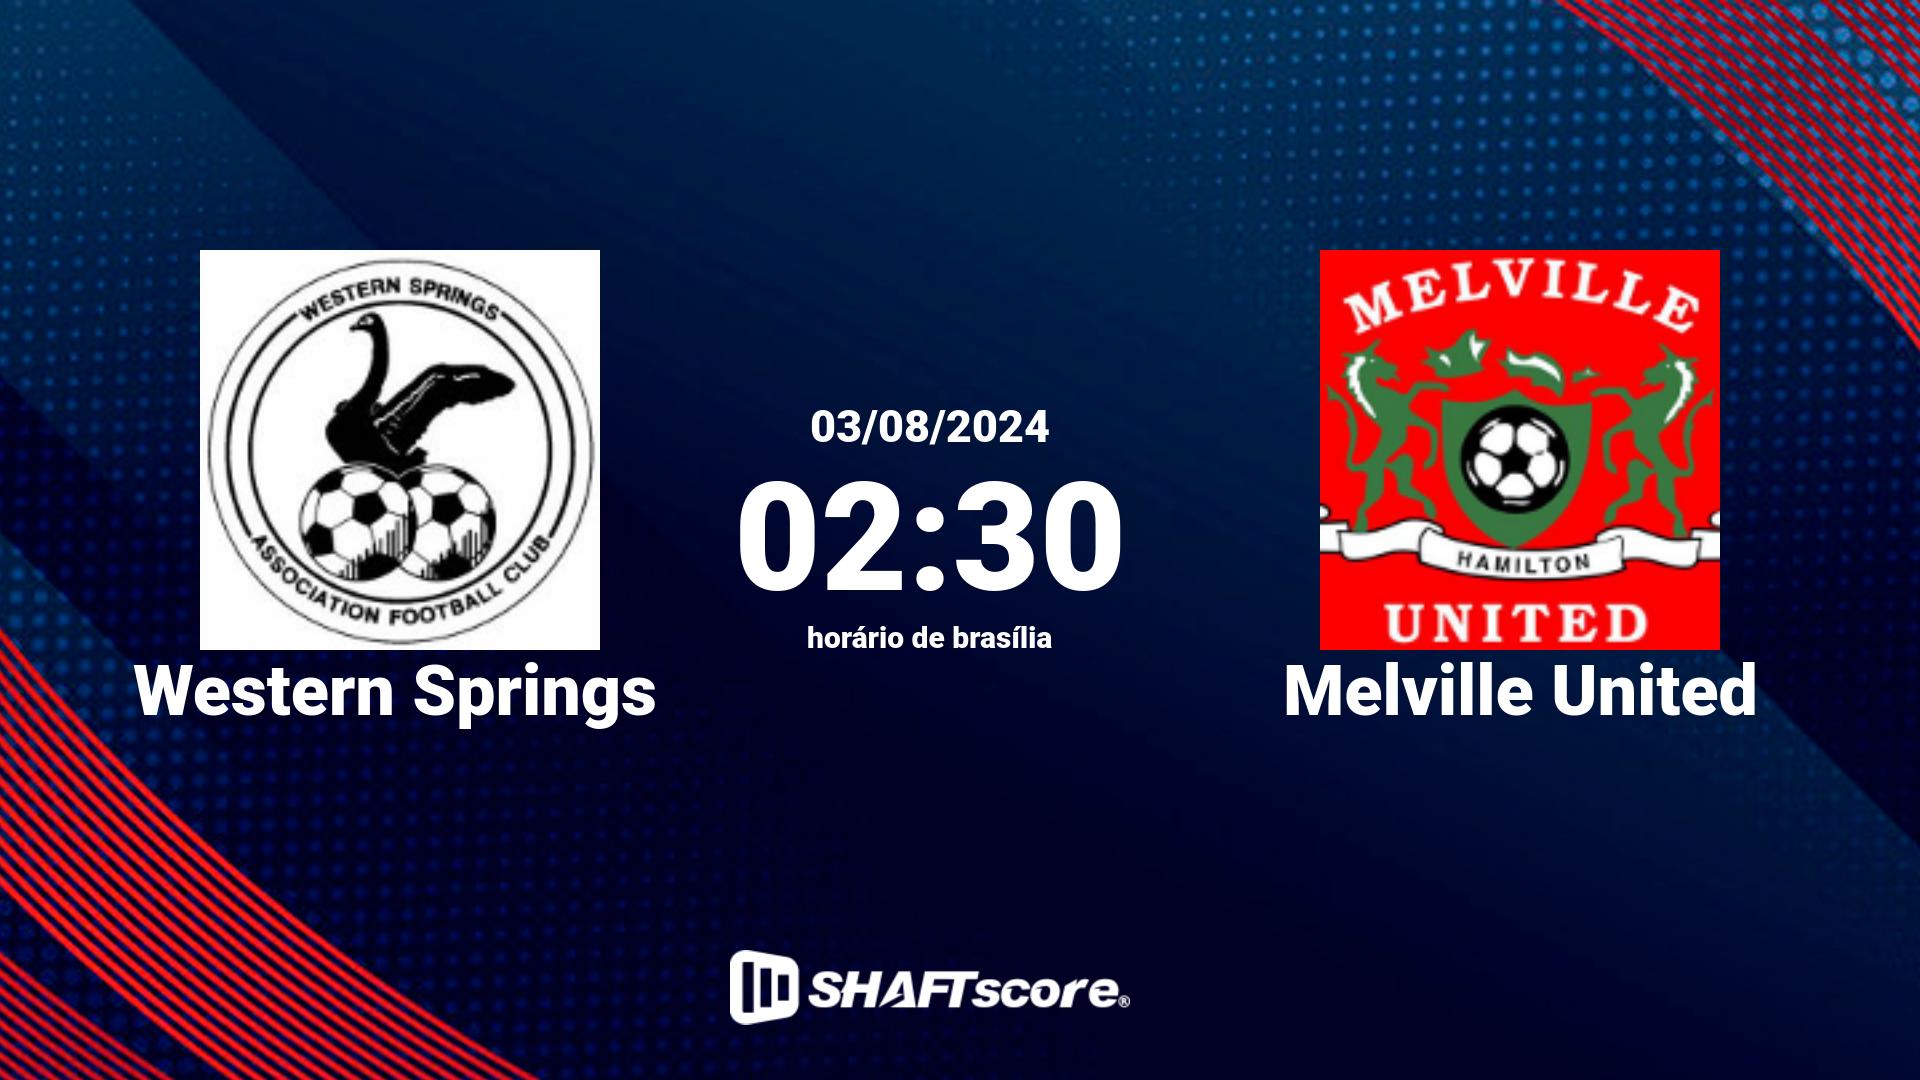 Estatísticas do jogo Western Springs vs Melville United 03.08 02:30